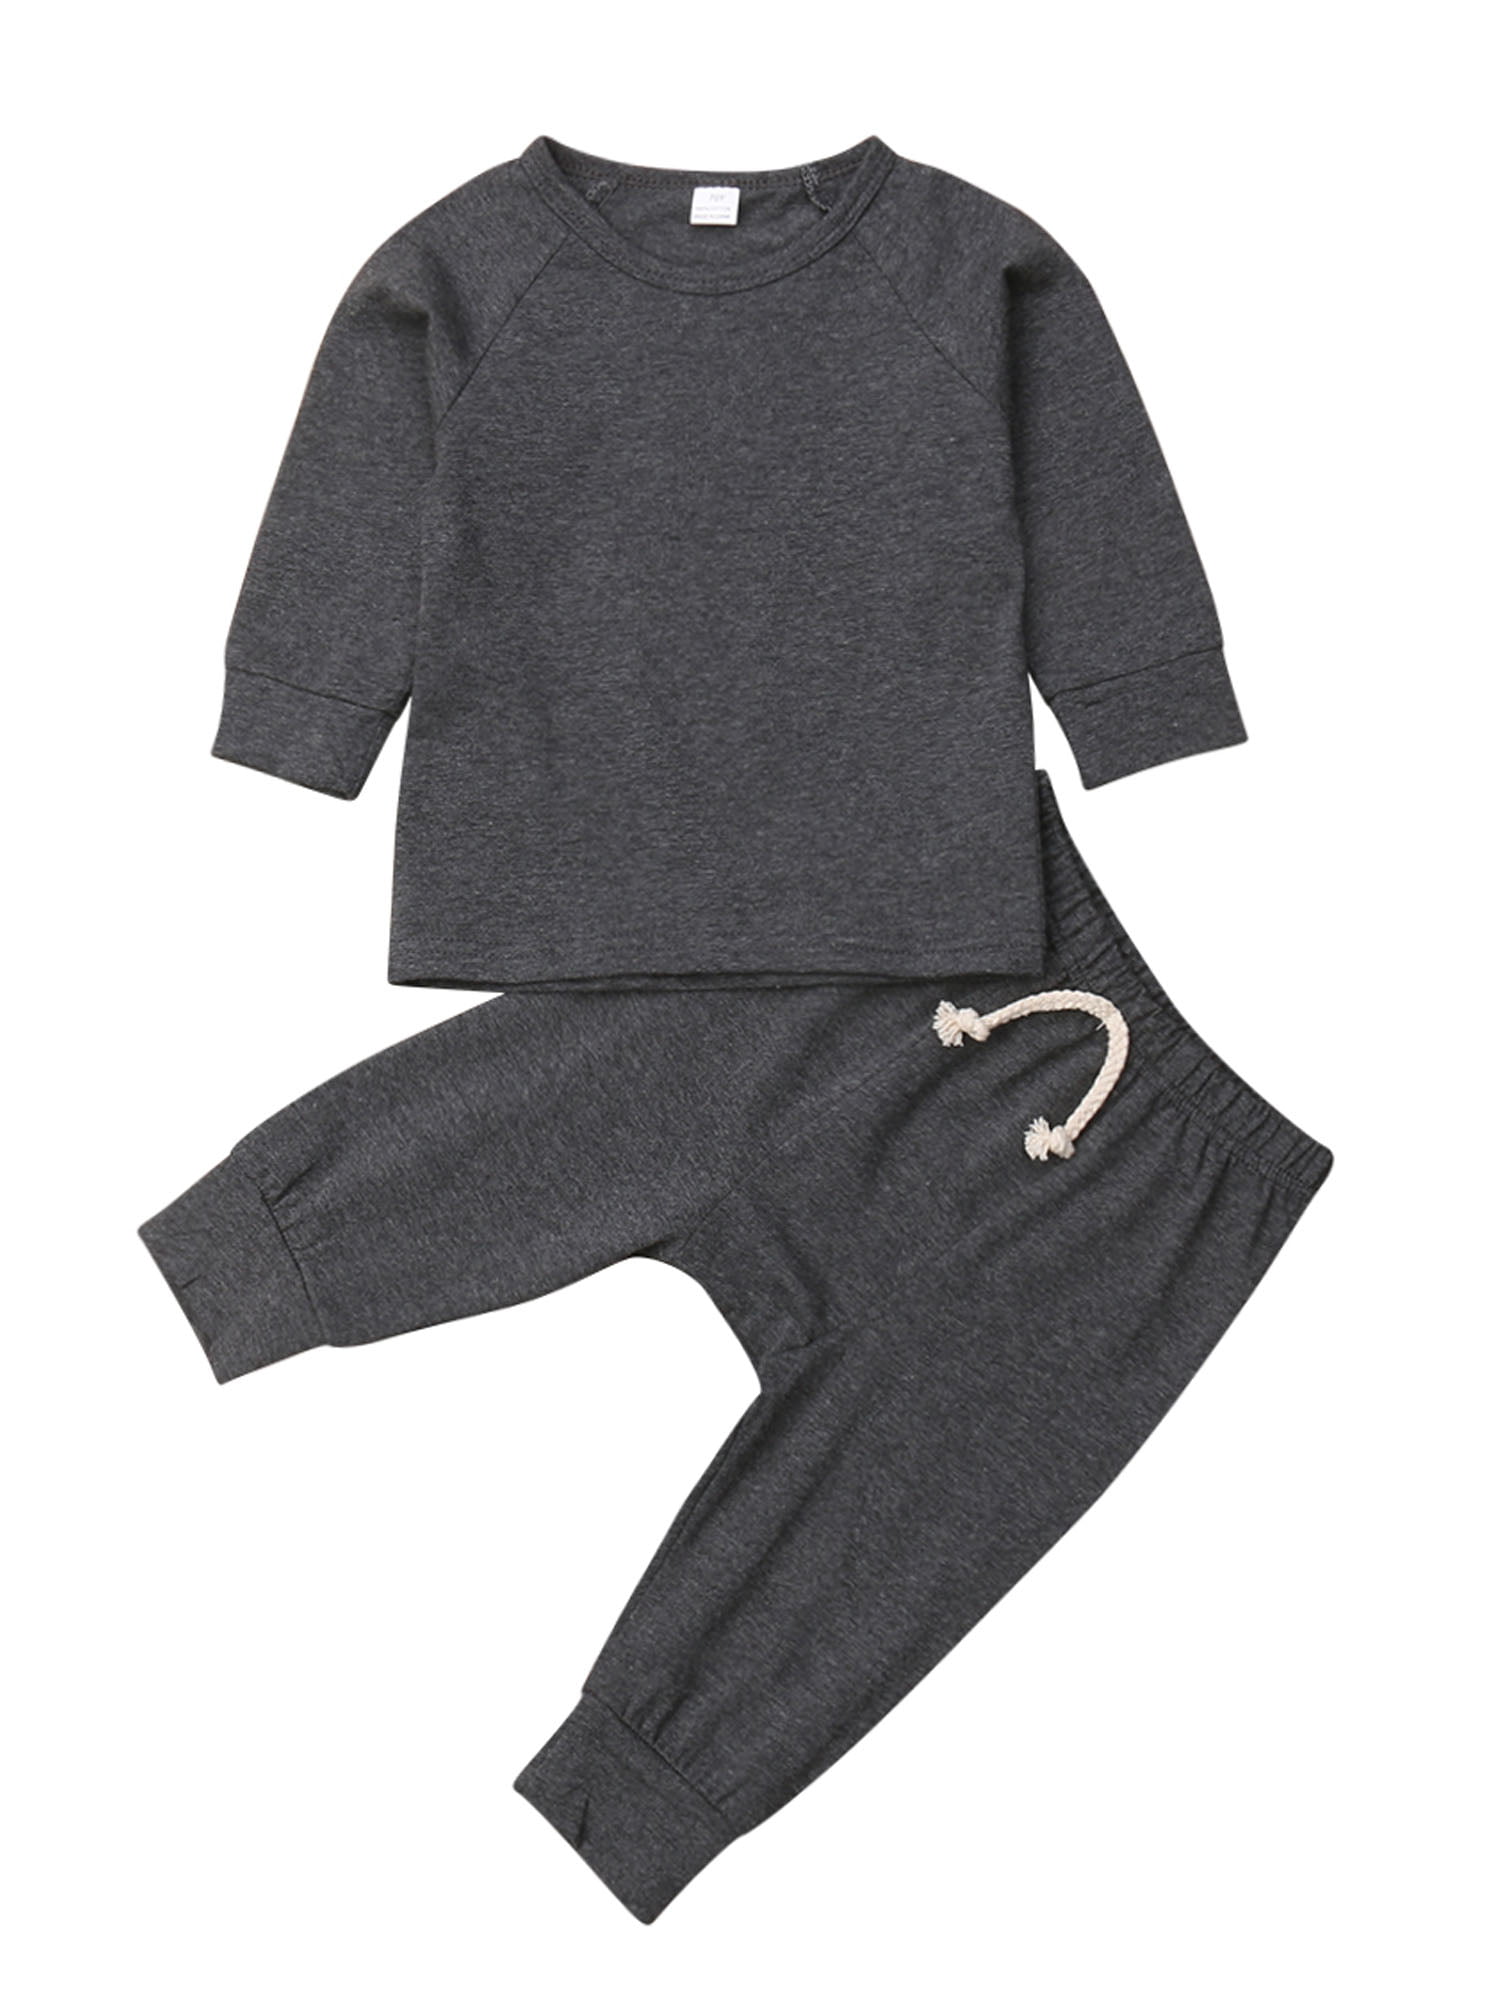 Baby Girl Boy Clothes Set Solid Long Sleeve Sweatshirt Top Pants Unisex Newborn Fall Winter Pajamas Outfits